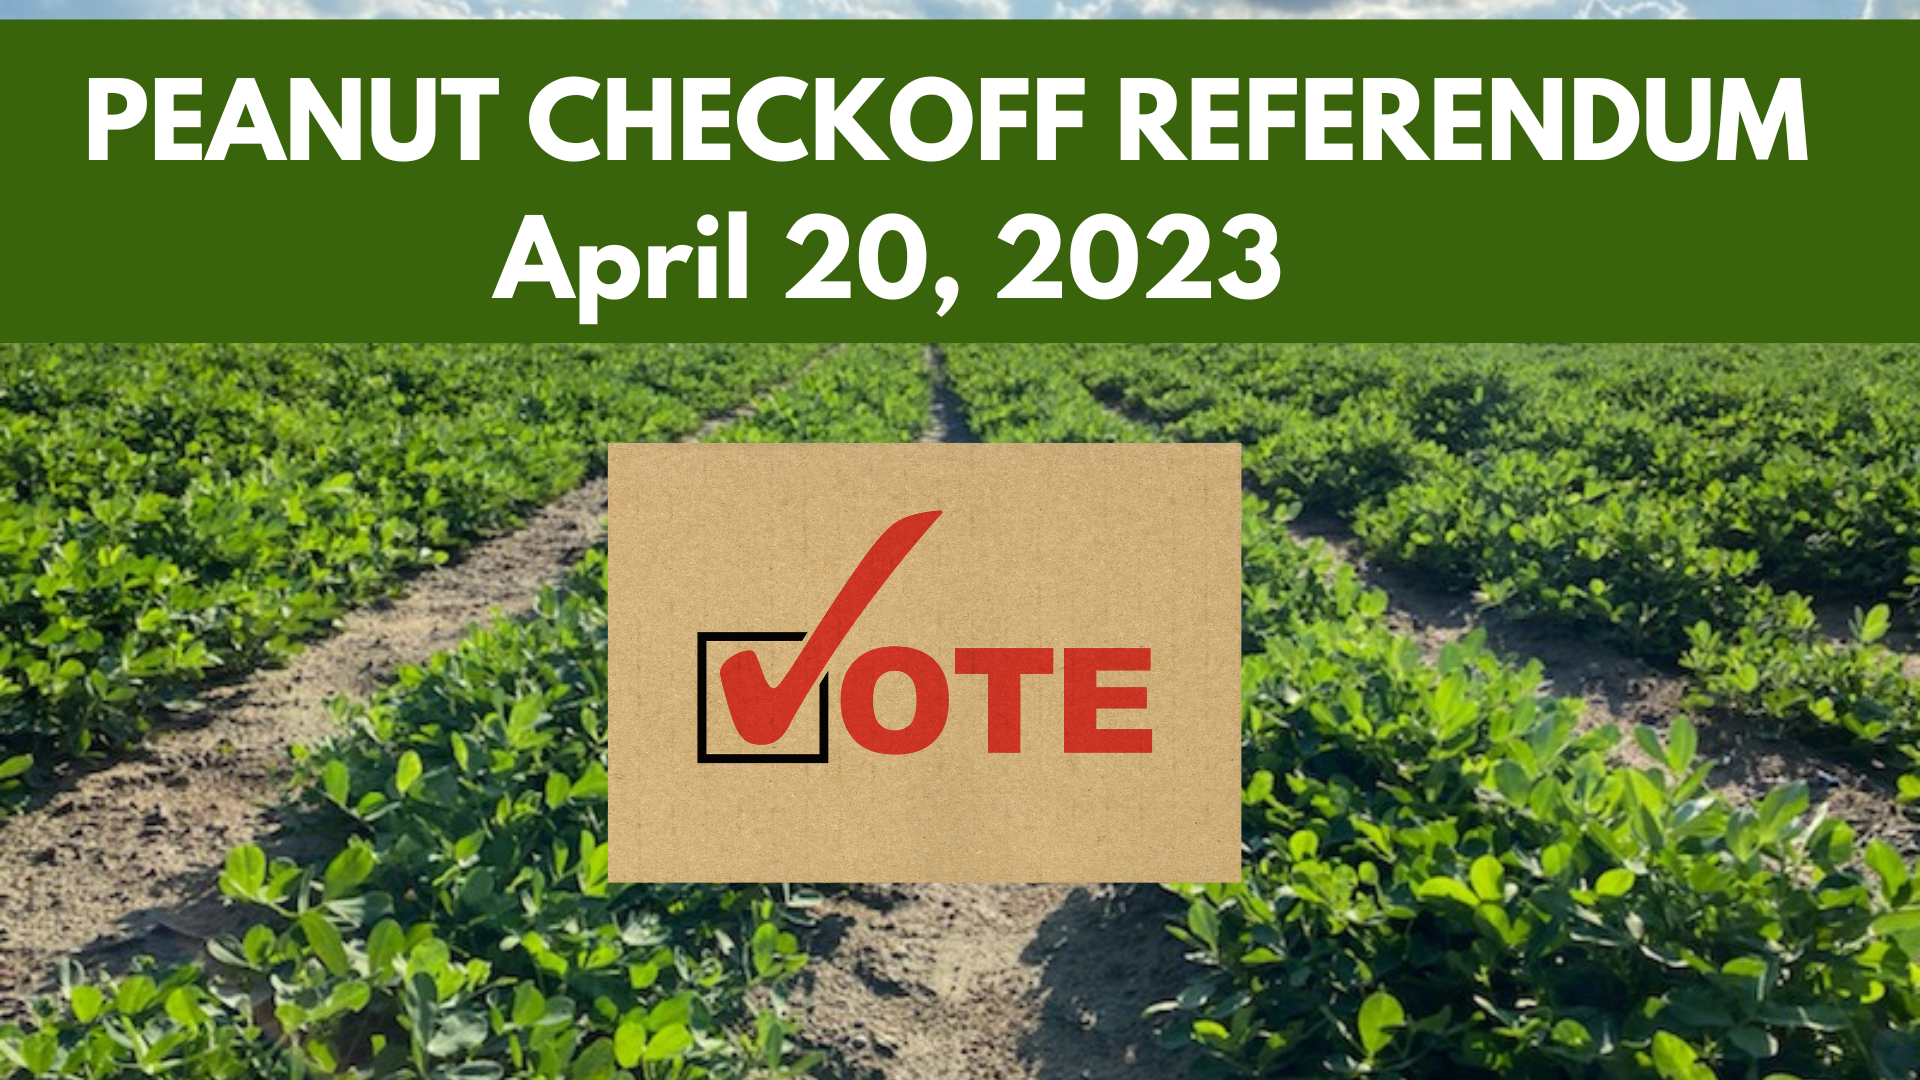 Peanut Referendum Vote set for April 20